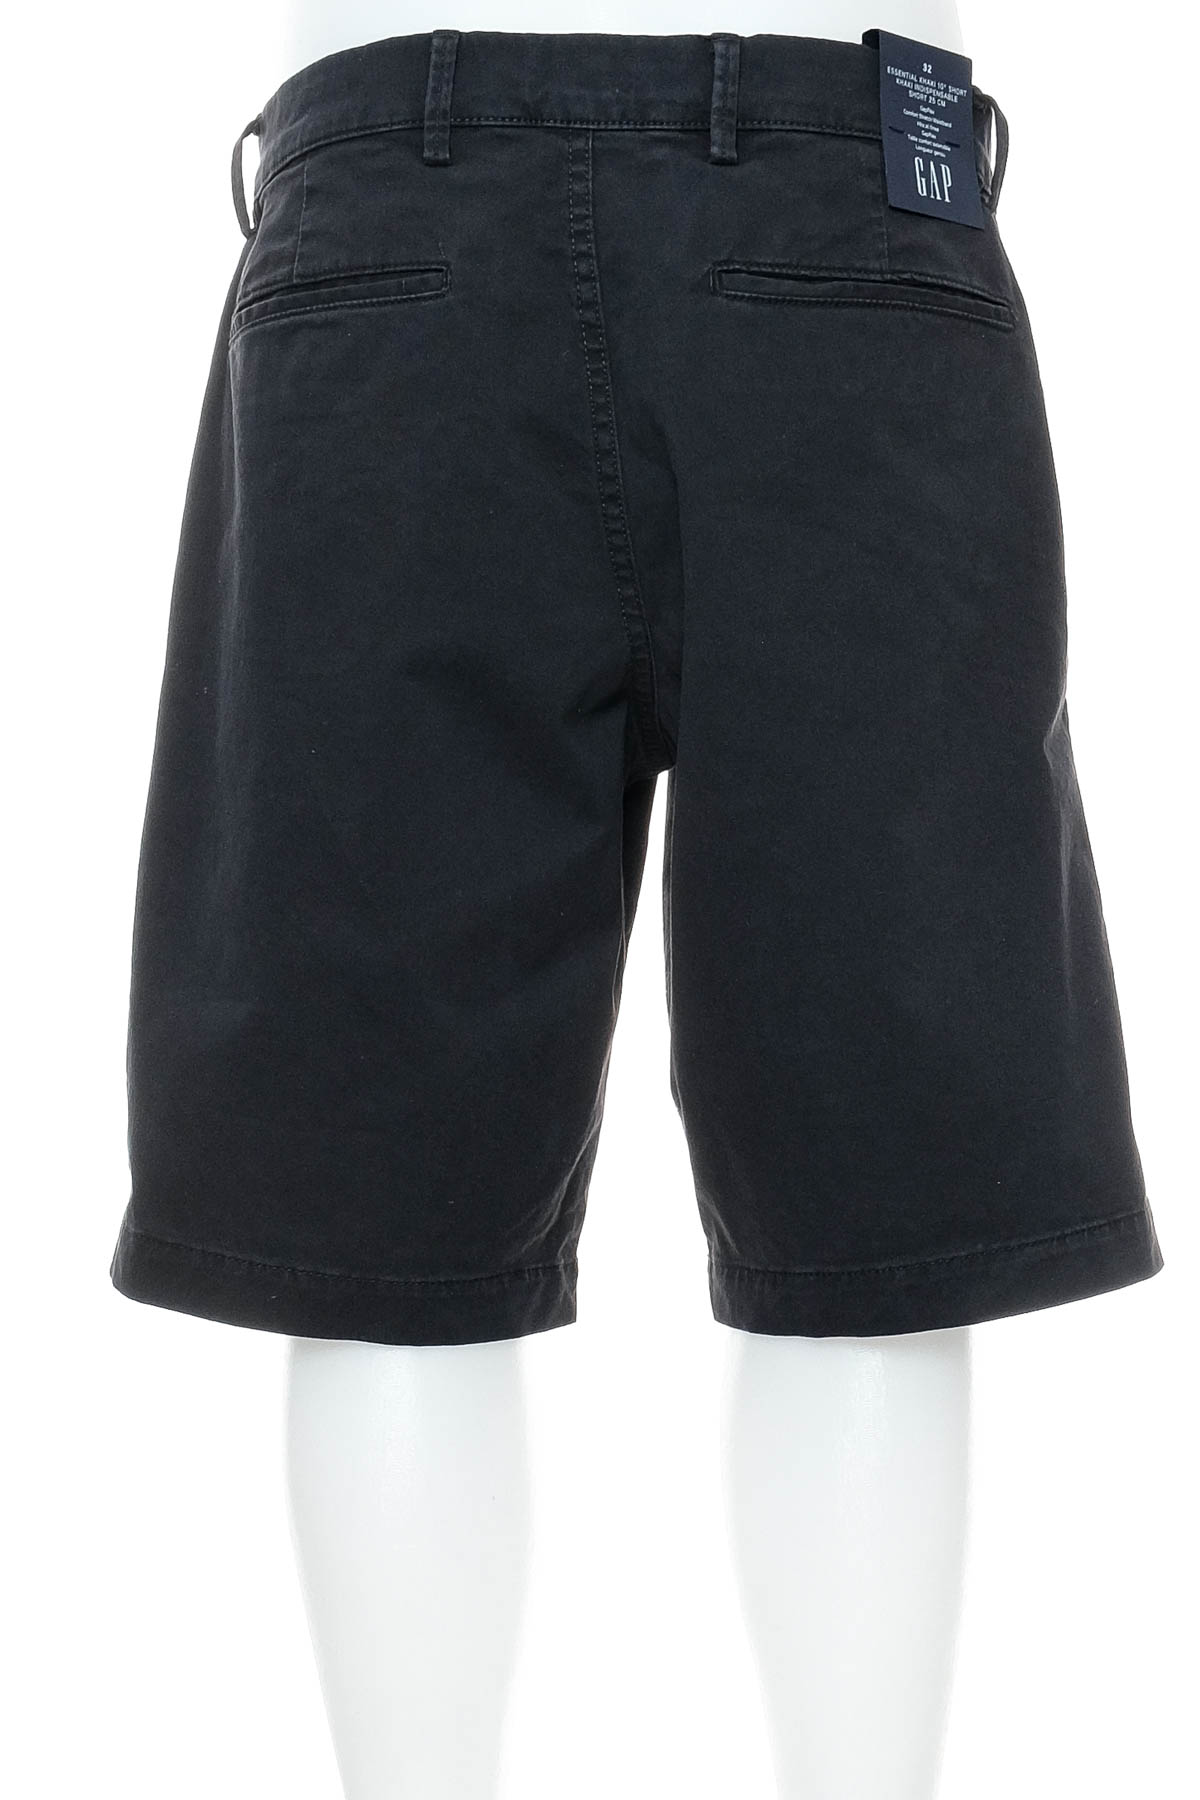 Men's shorts - GAP - 1